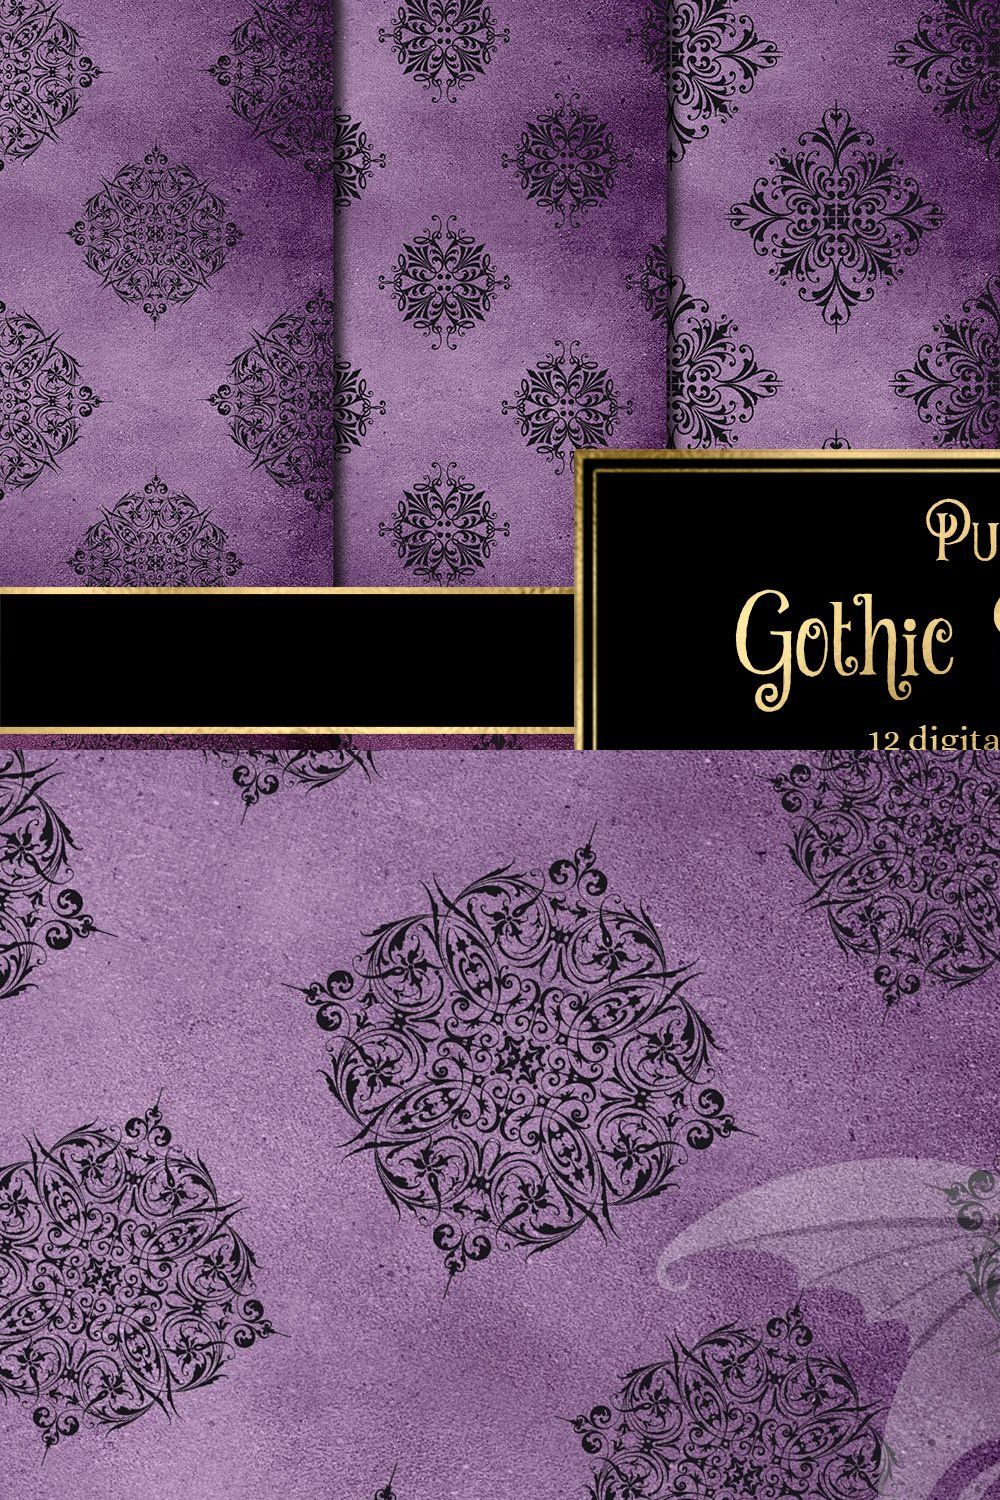 Purple Gothic Damask Digital Paper pinterest preview image.